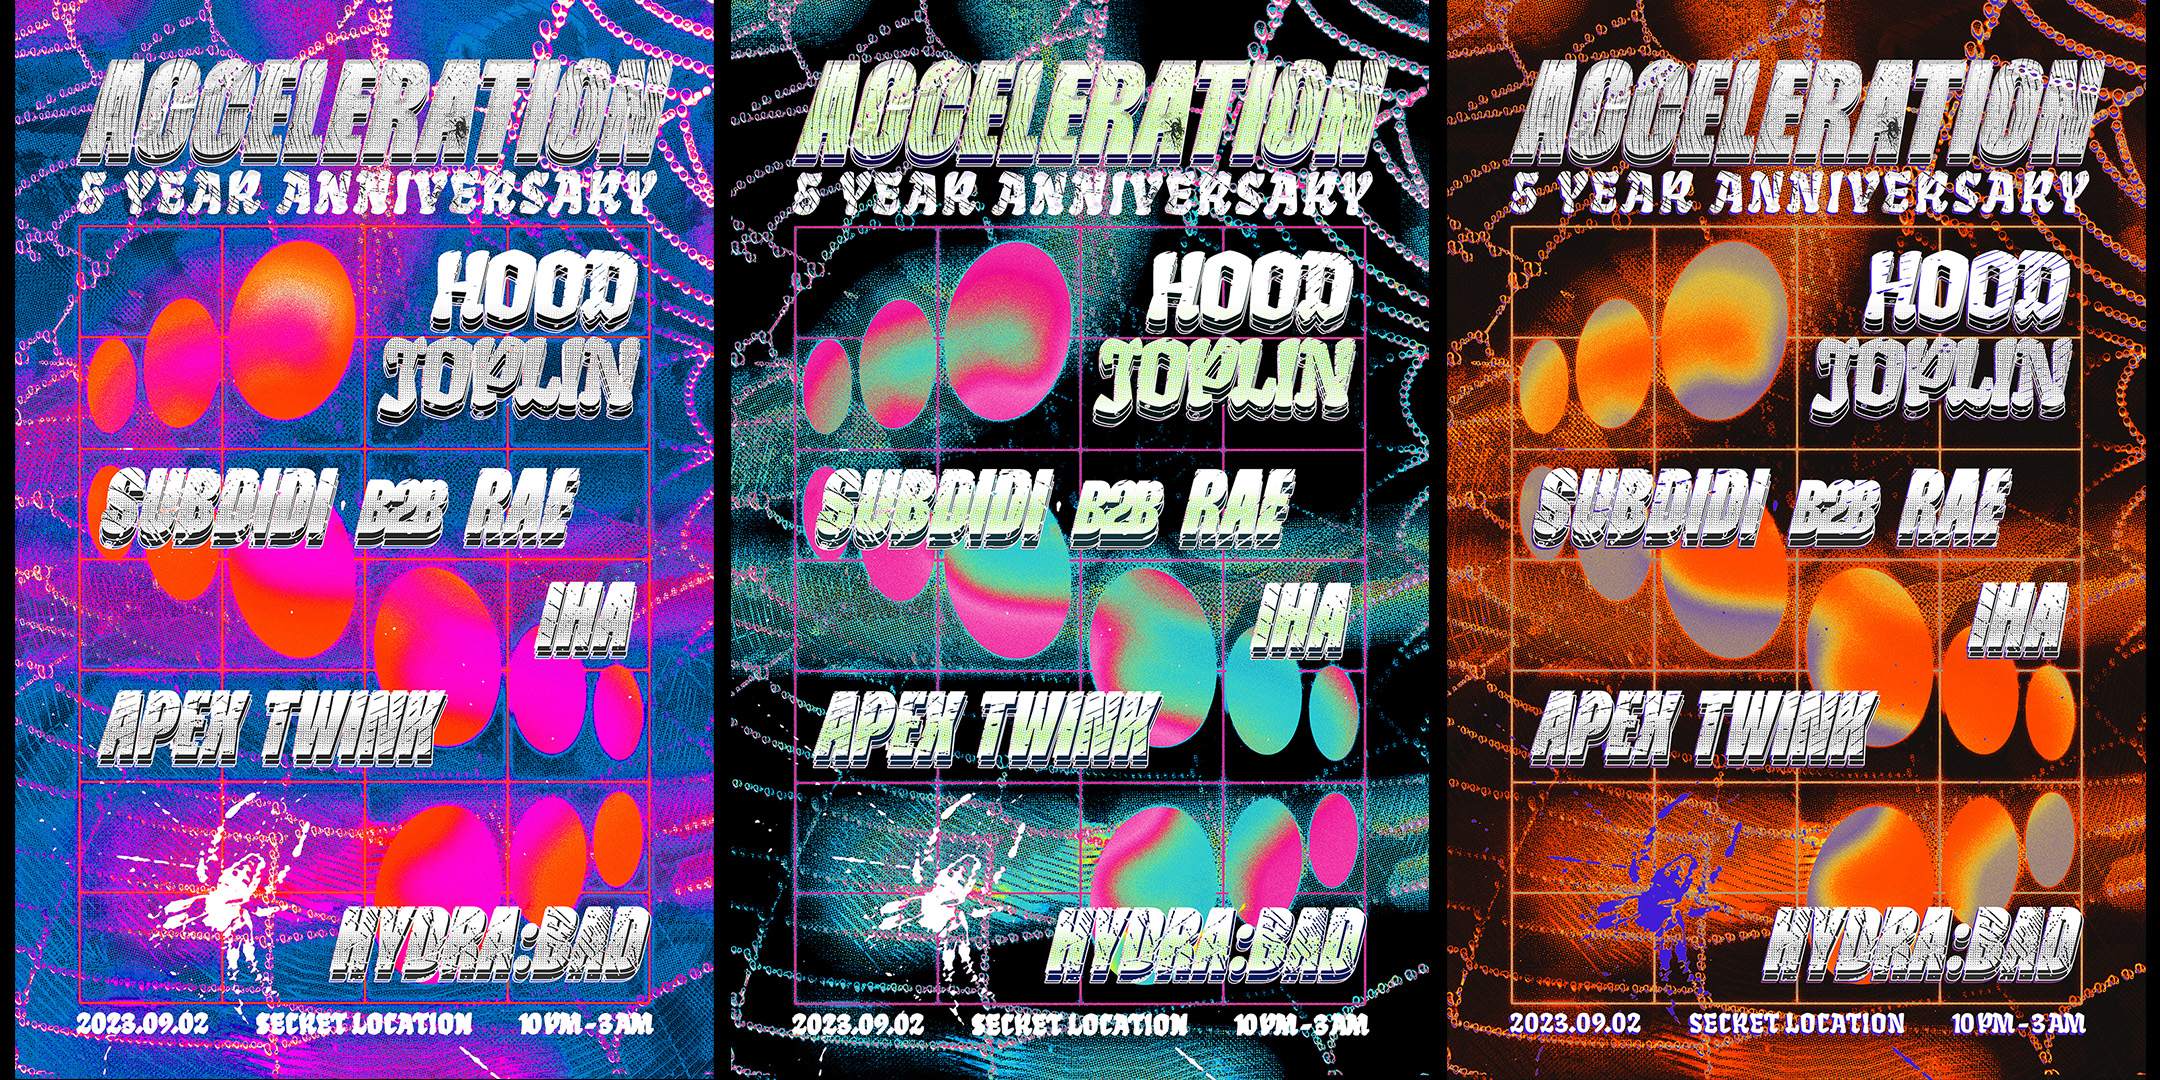 Acceleration - 5 year anniversary: Hood Joplin, Subdidi b2b Rae, IHA, hydra:bad, Apex Twink - Página frontal